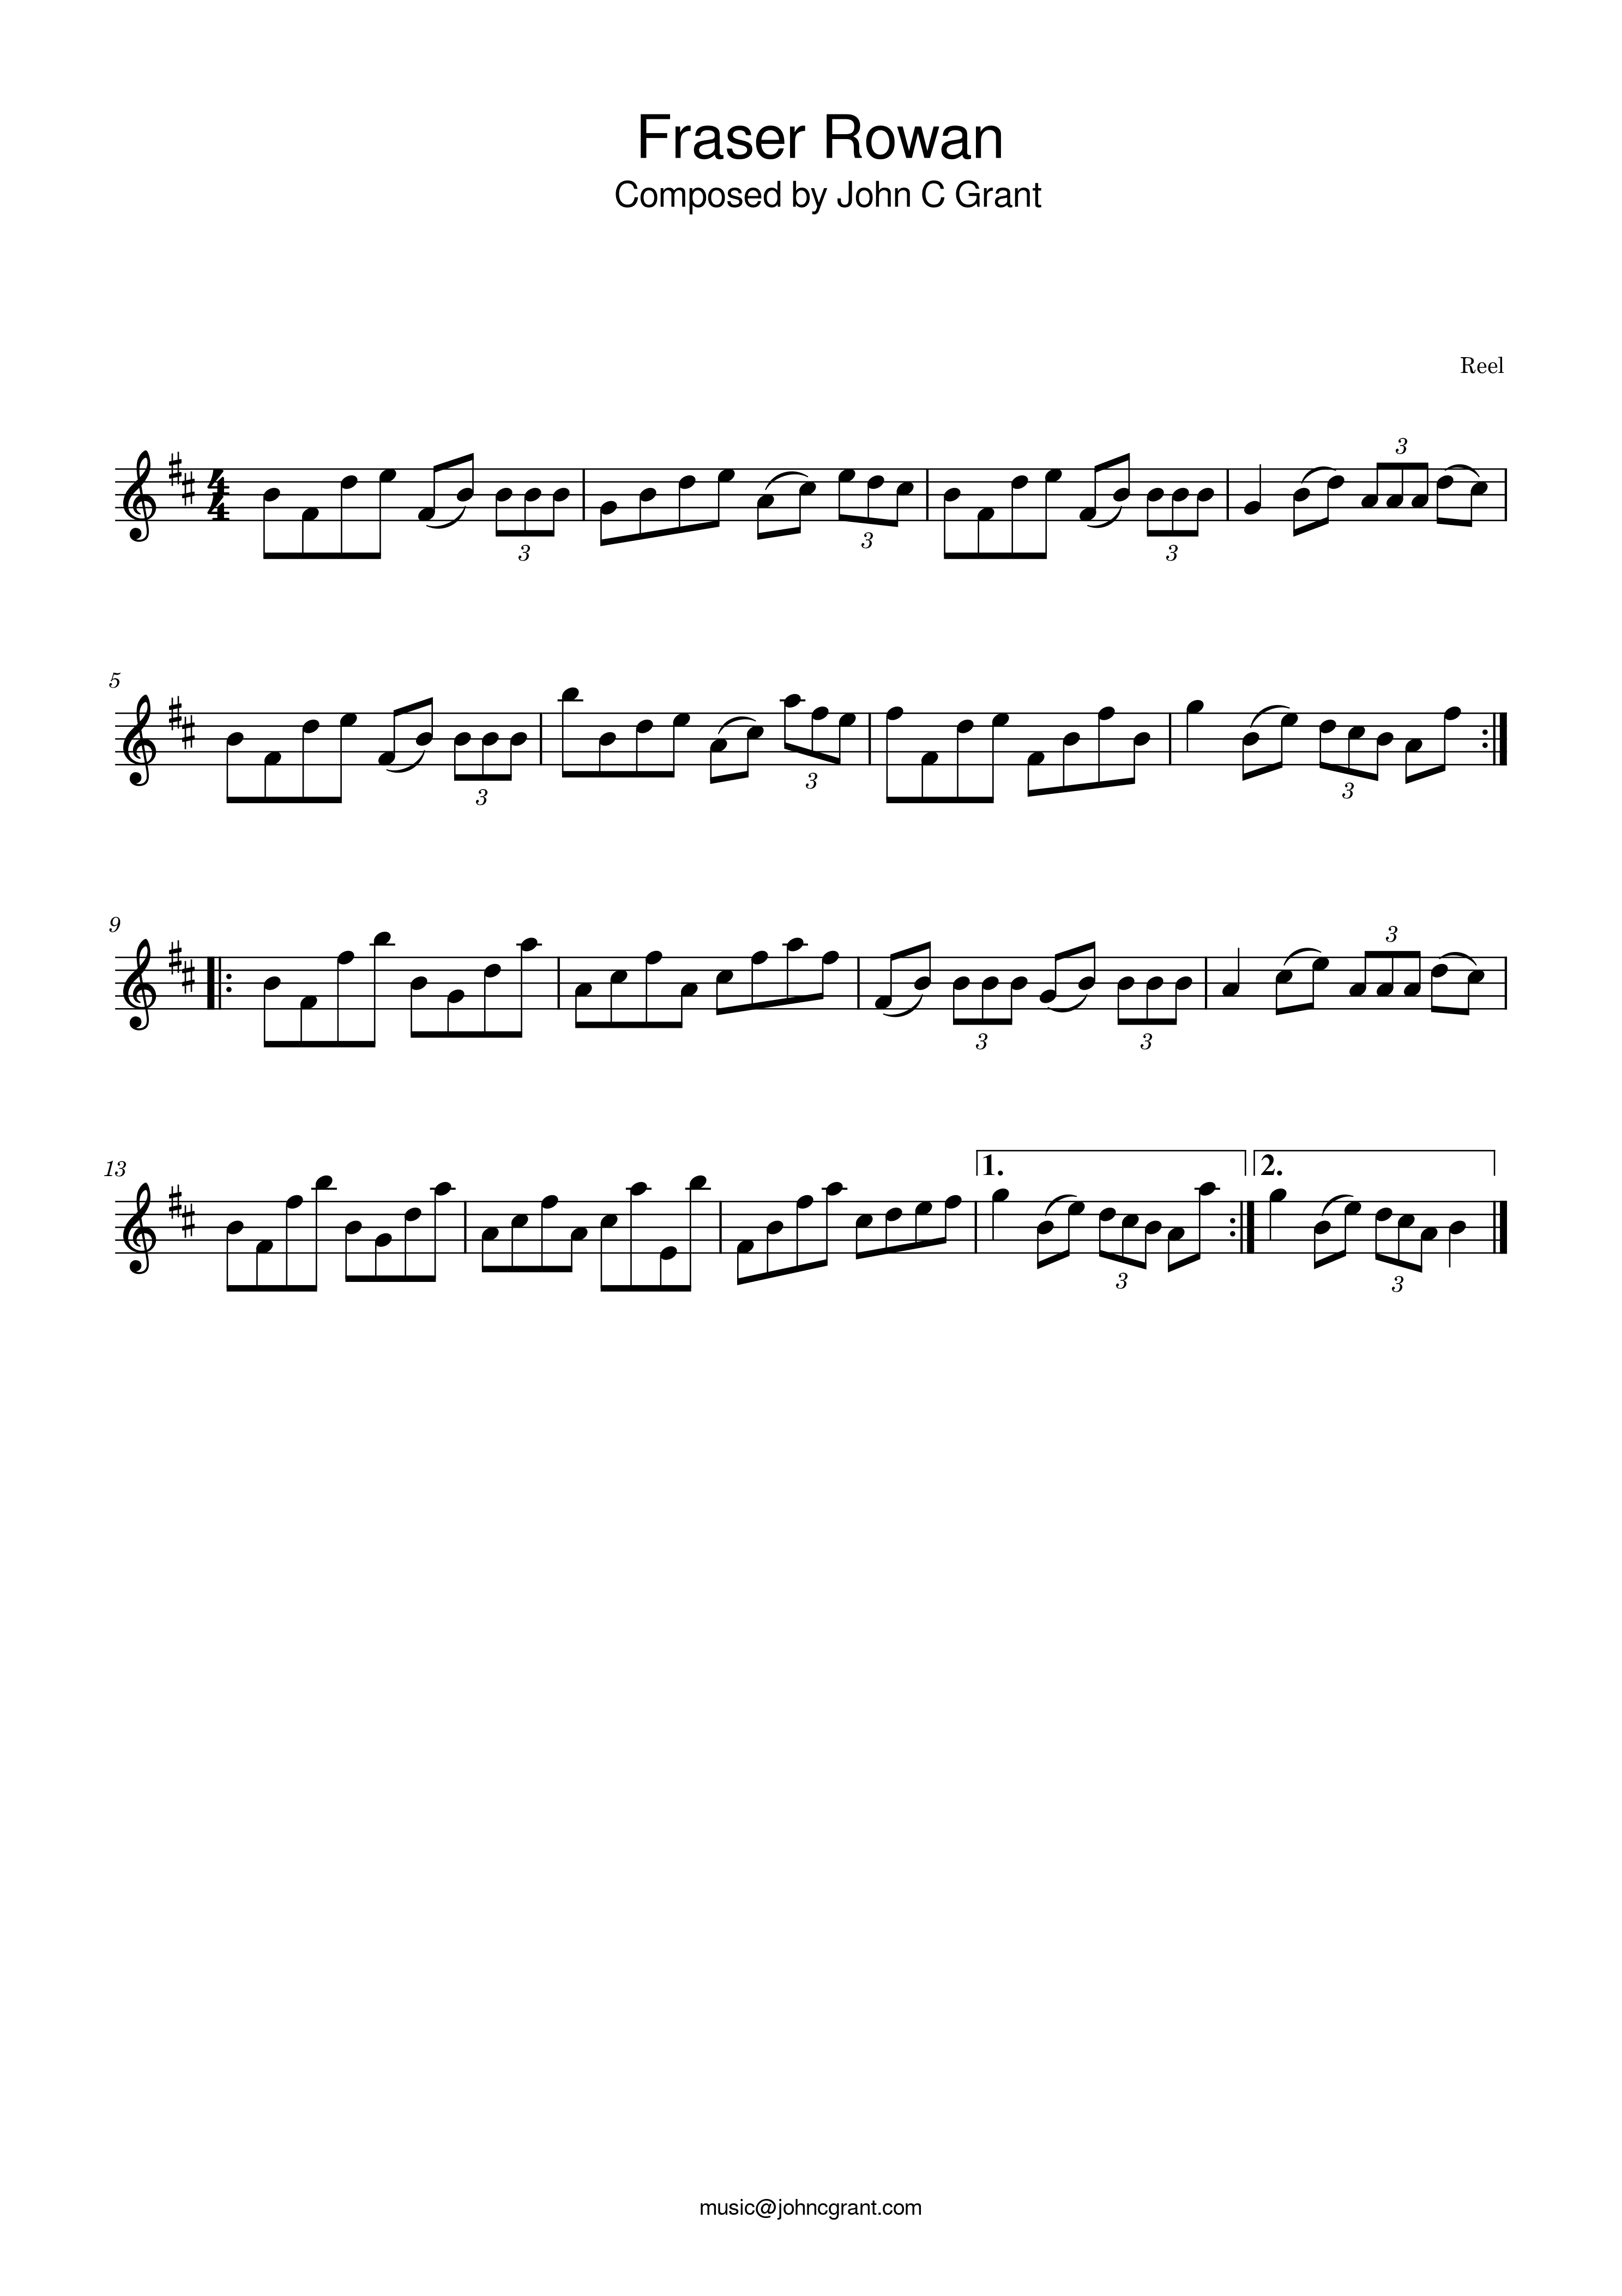 Fraser Rowan - Composed by John C Grant (https://johncgrant.com). Traditional composer from Kilmarnock, Ayrshire, Scotland.